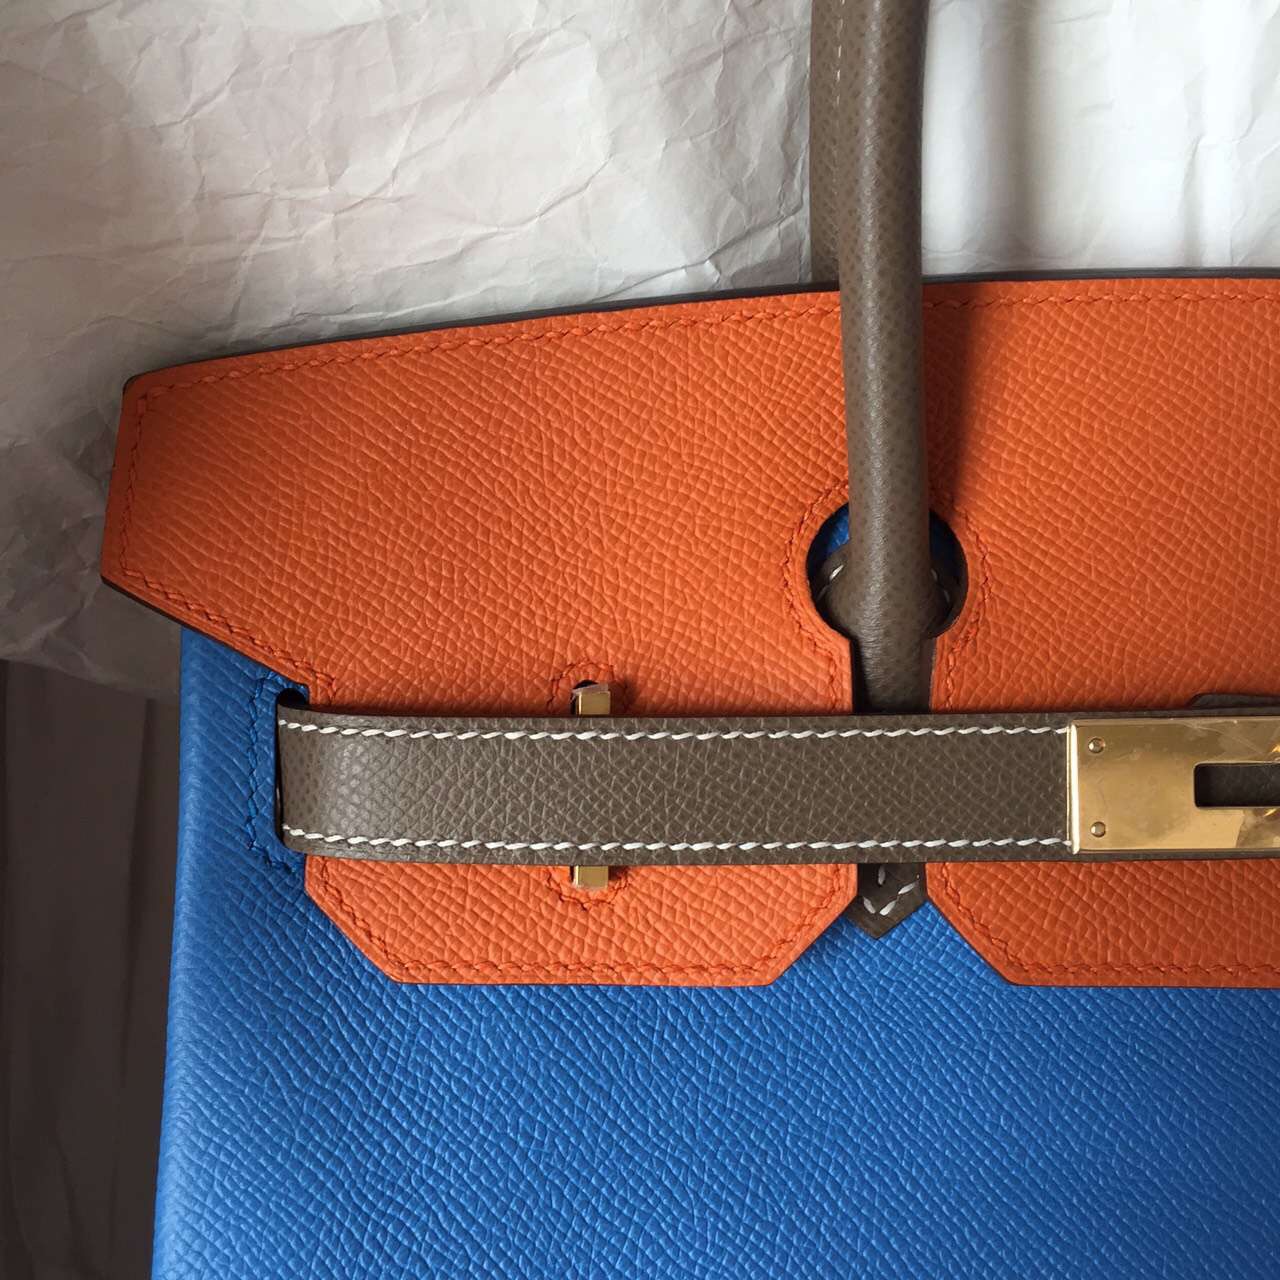 Cheap Hermes Epsom Leather Birkin Bag 30CM in 2T Blue Paradise/Etoupe Grey/Orange Color